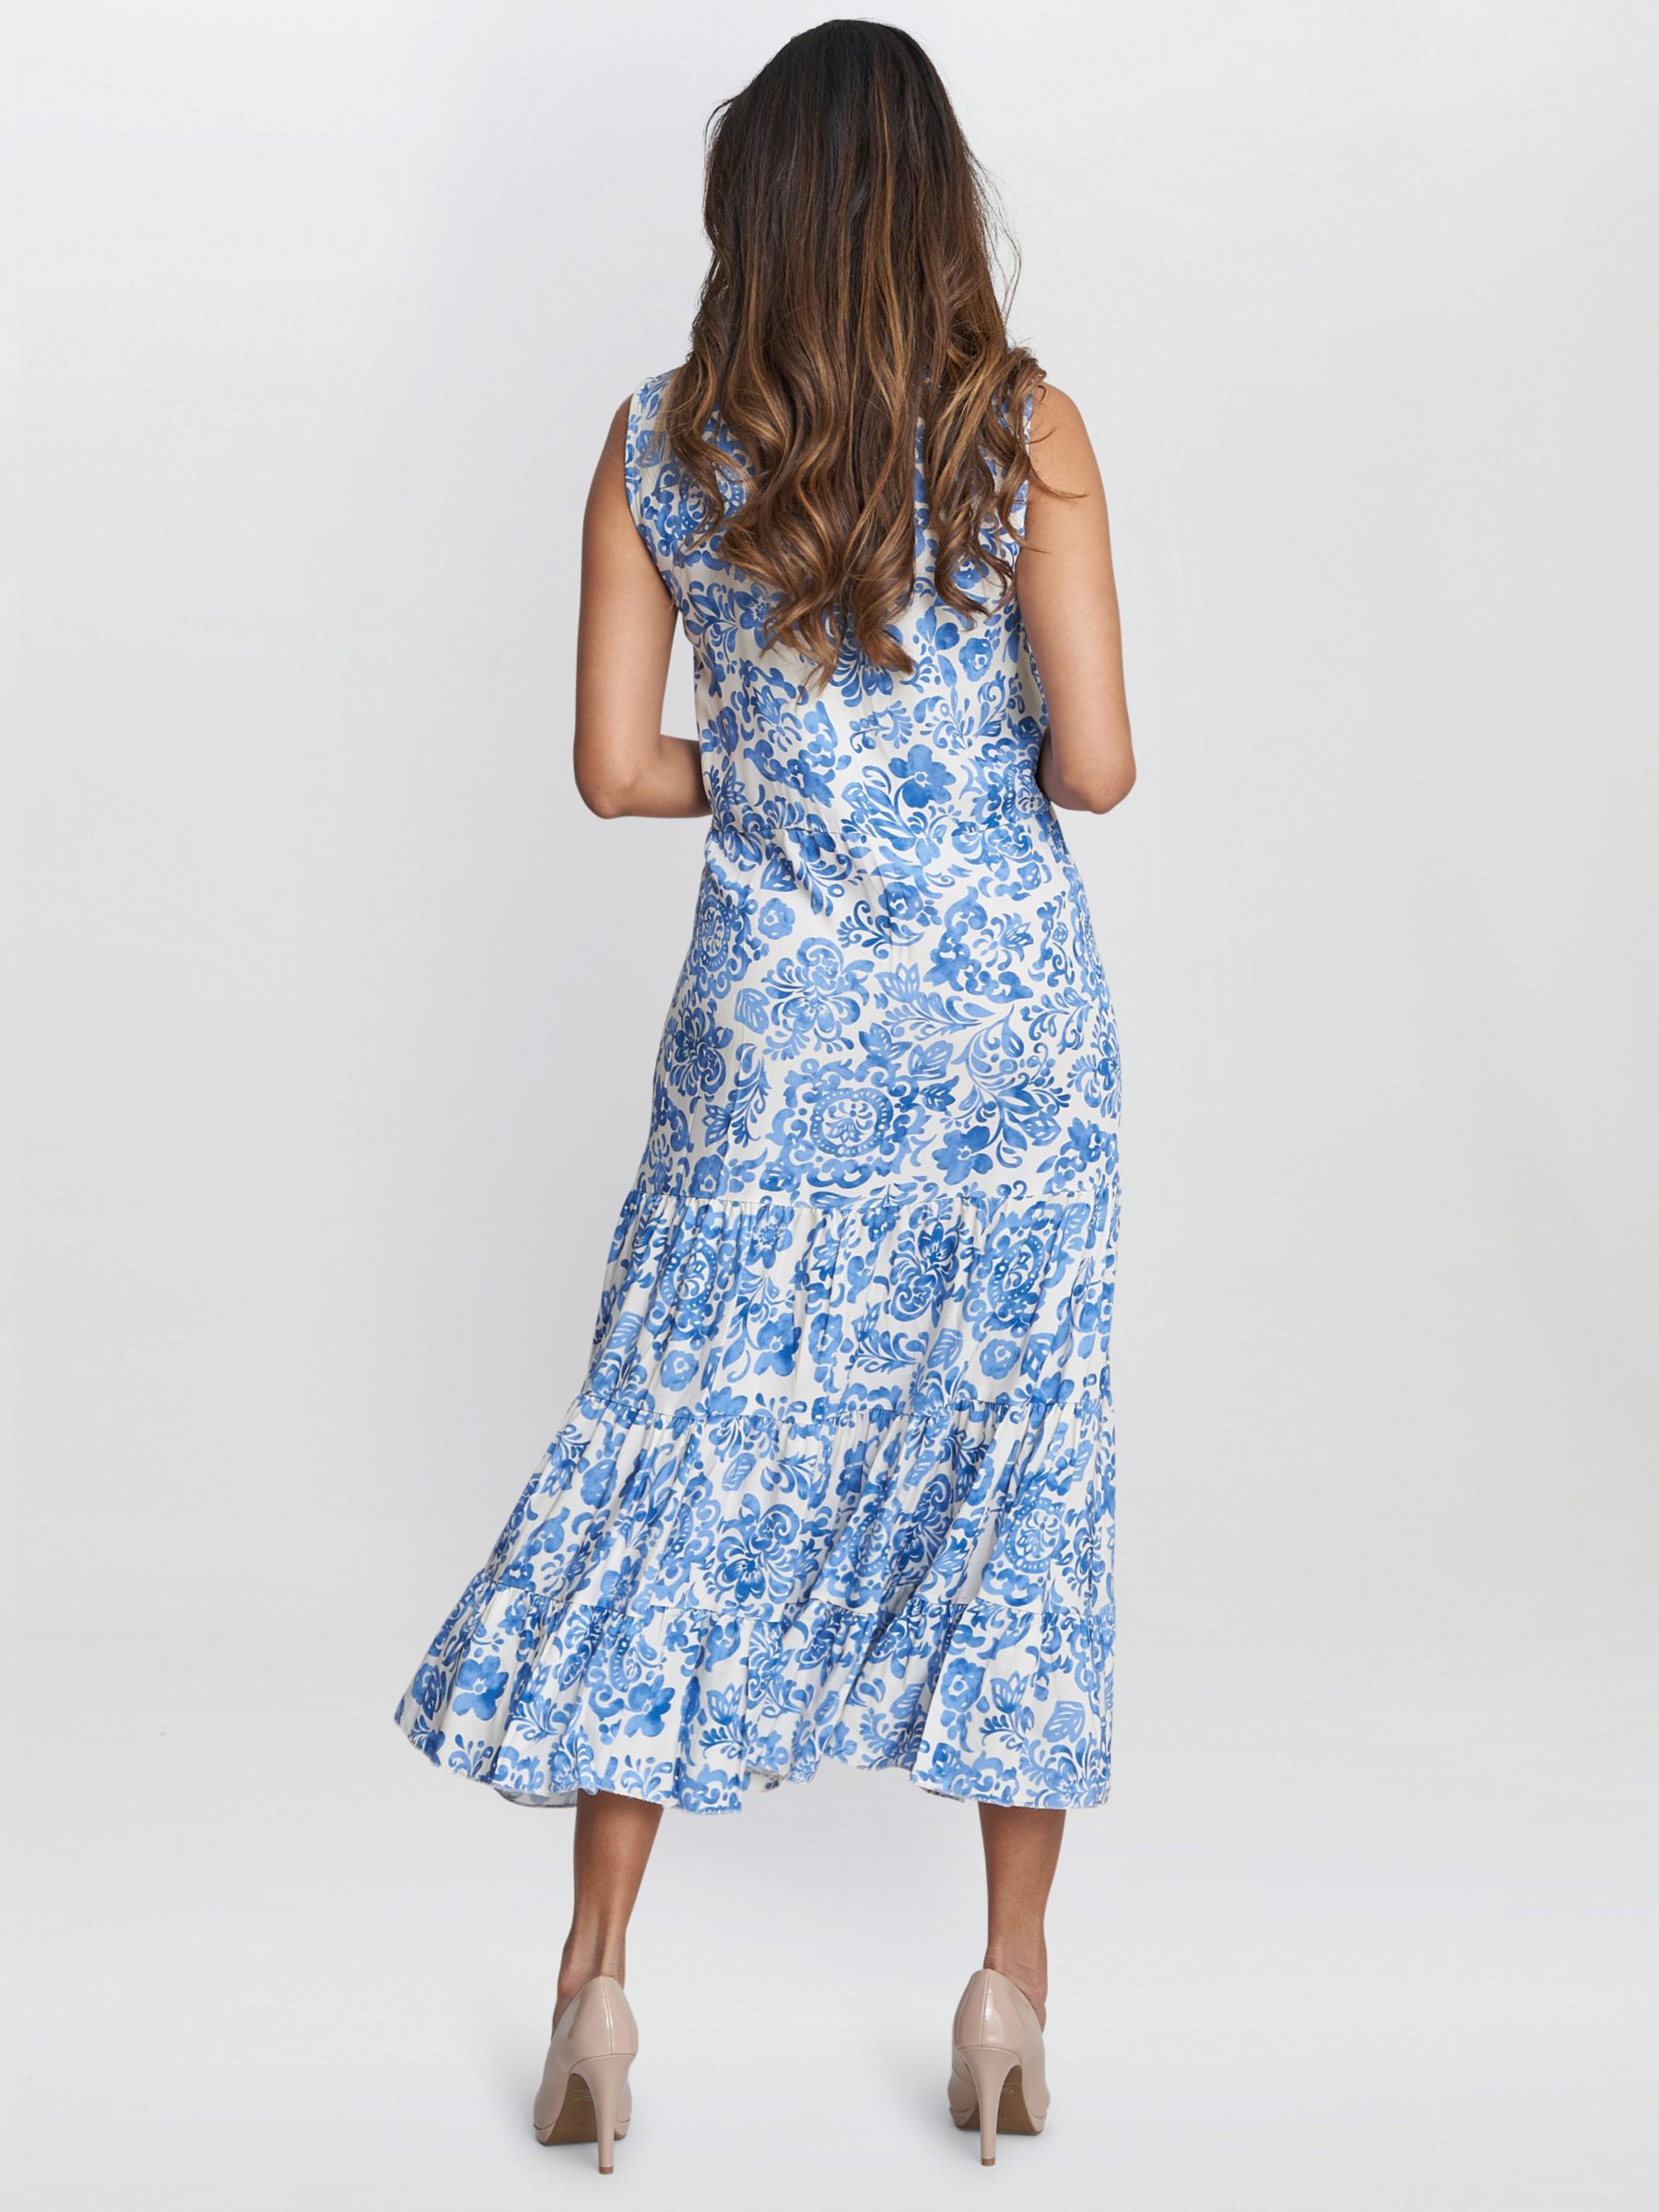 Gina Bacconi Lolita Floral Print Sleeveless Midi Dress, Blue/White, S